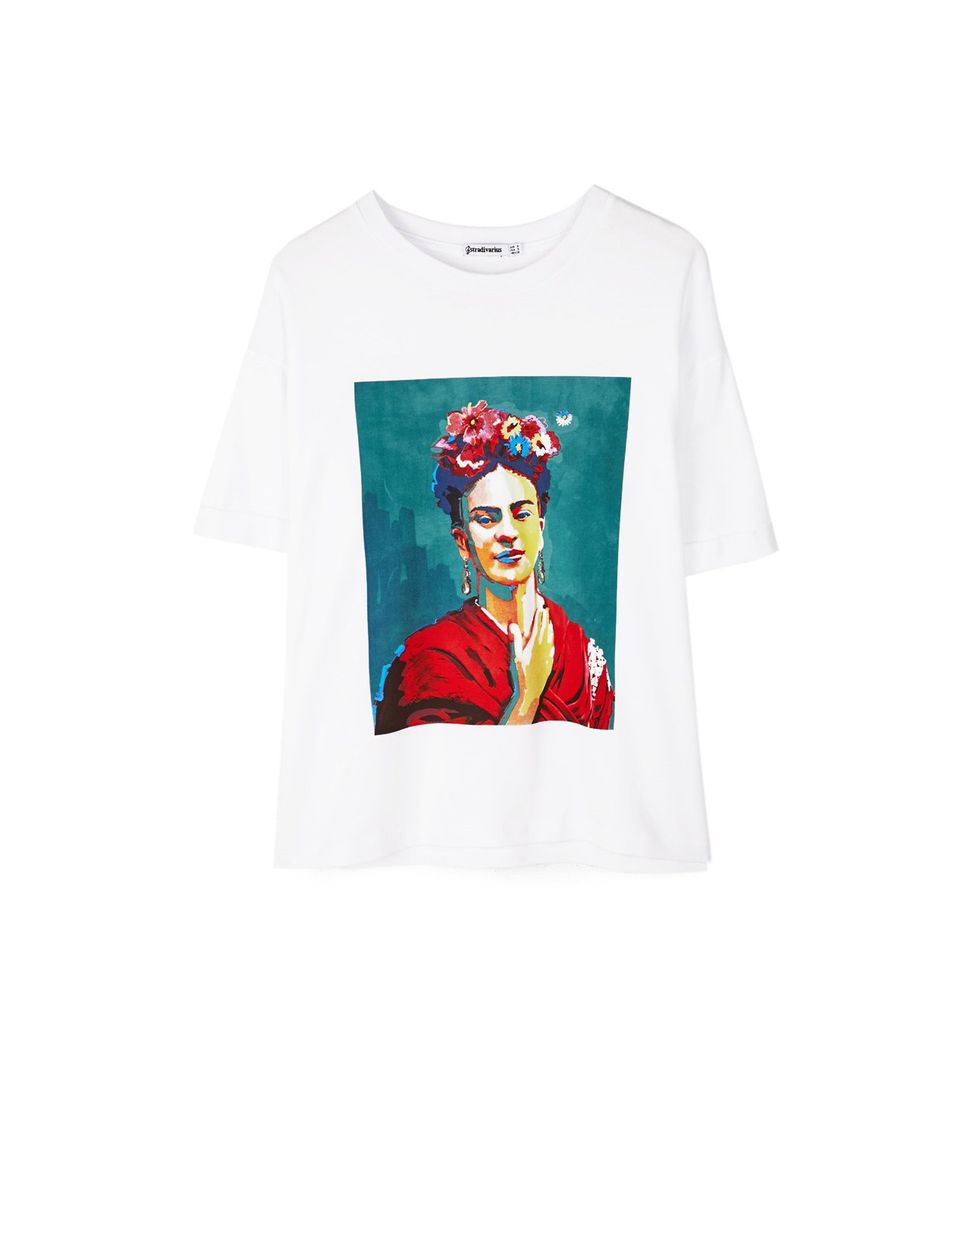 Stradivarius saca camisetas Frida Frida Kahlo llega a Stradivarius